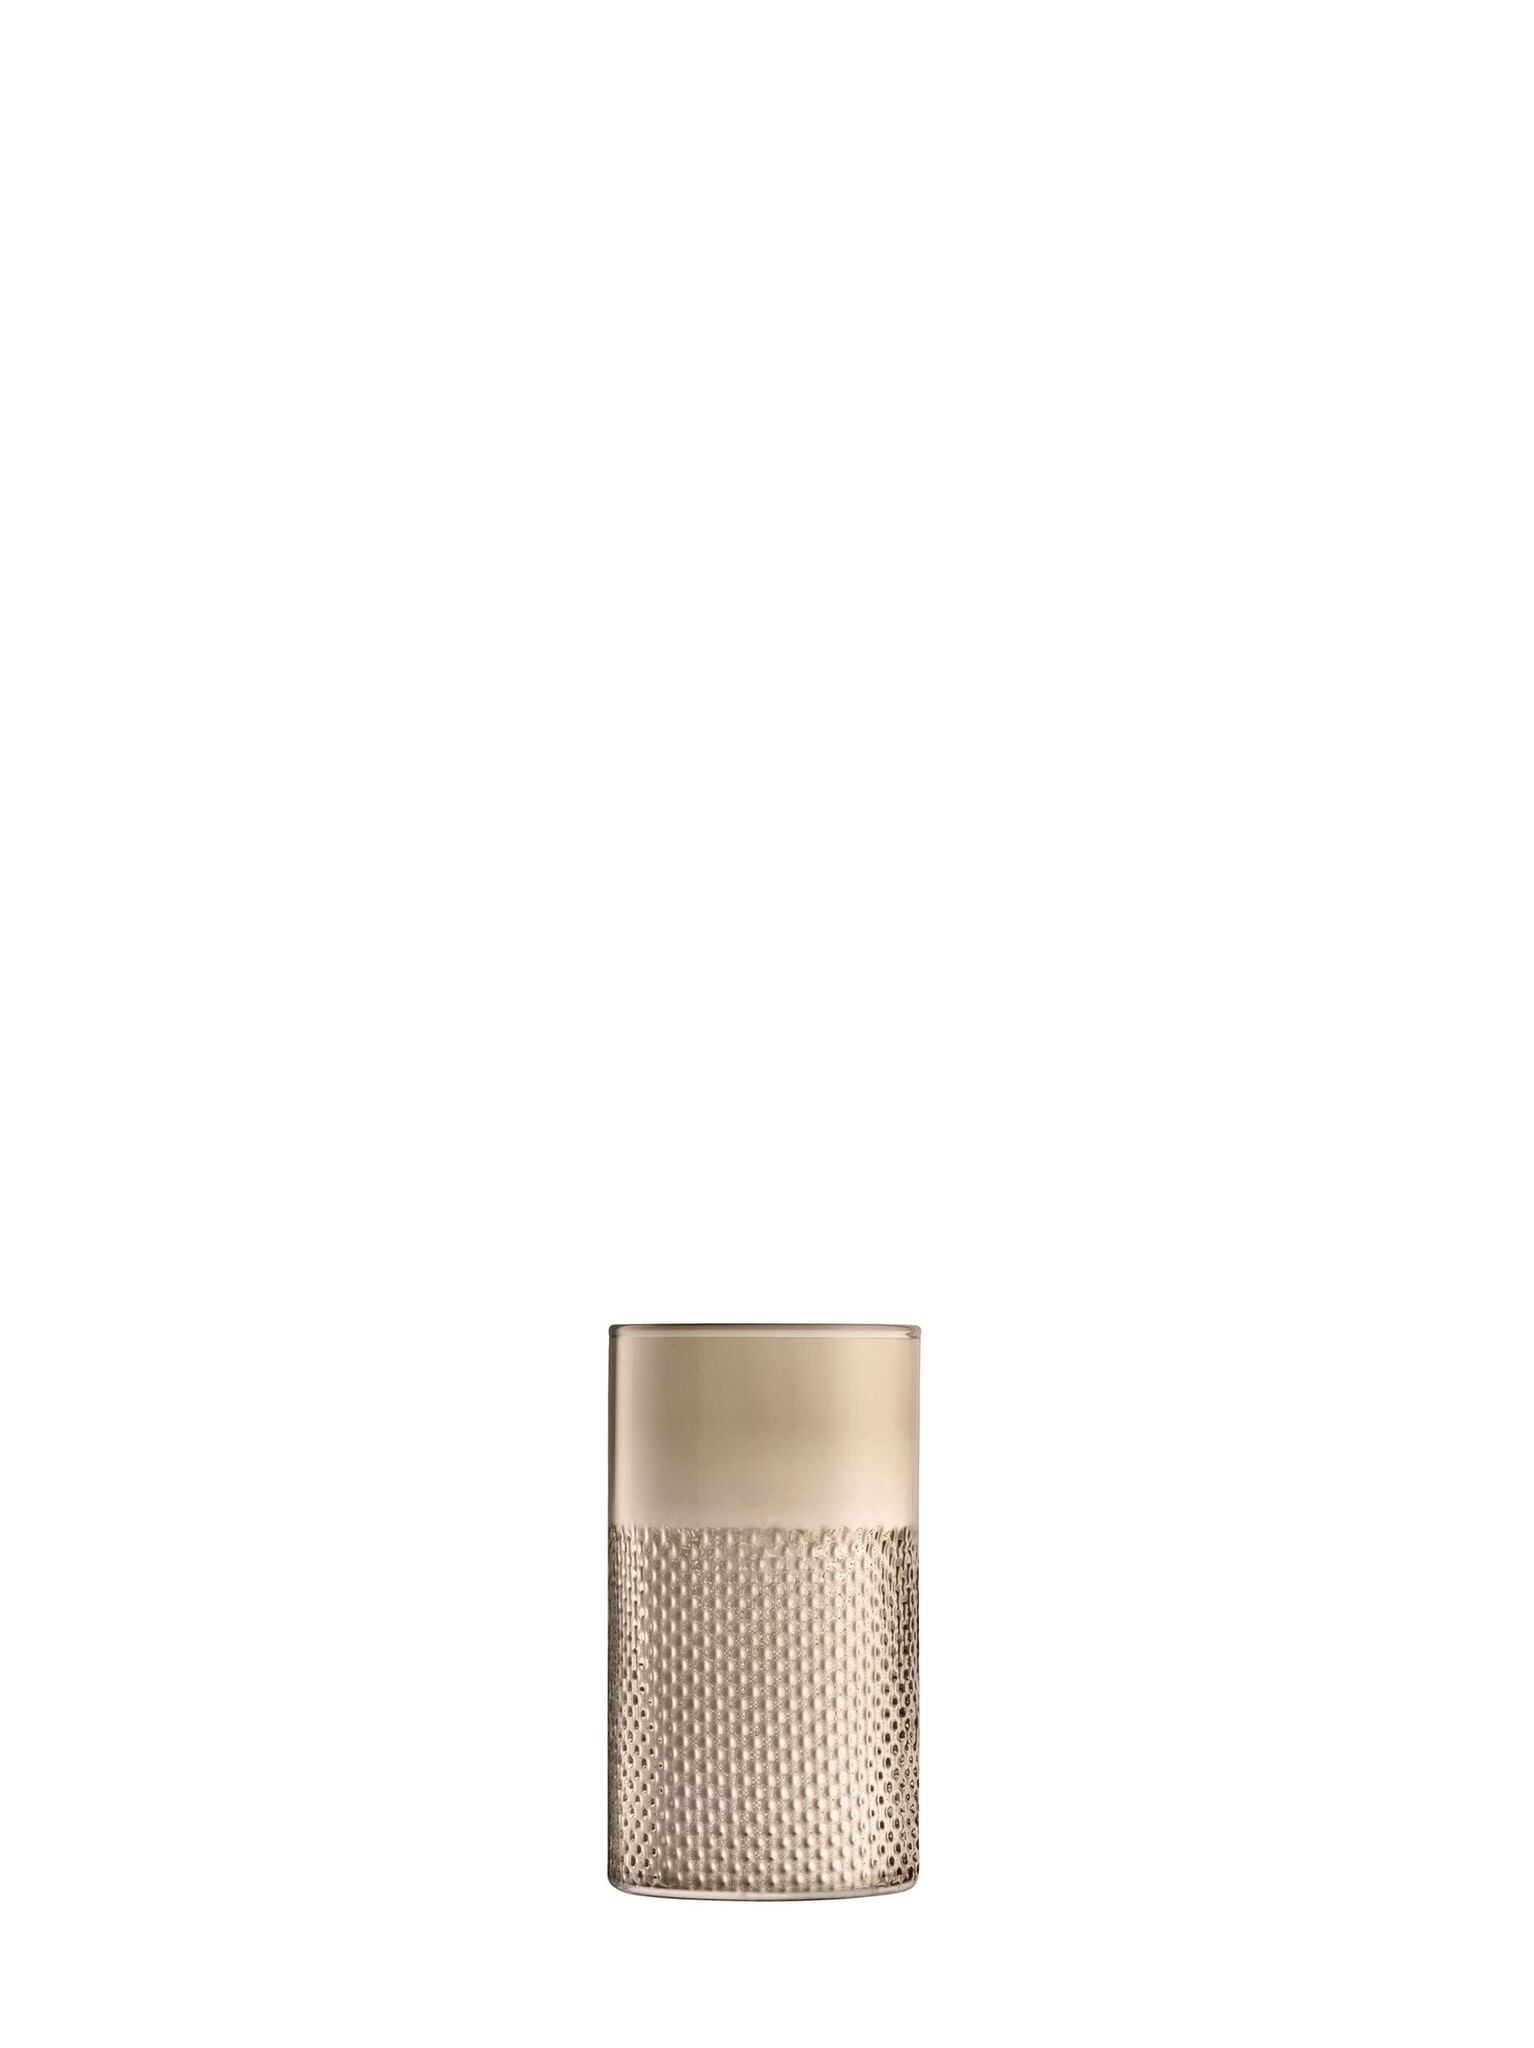 L.S.A. Wicker Laterne / Vase 25 cm